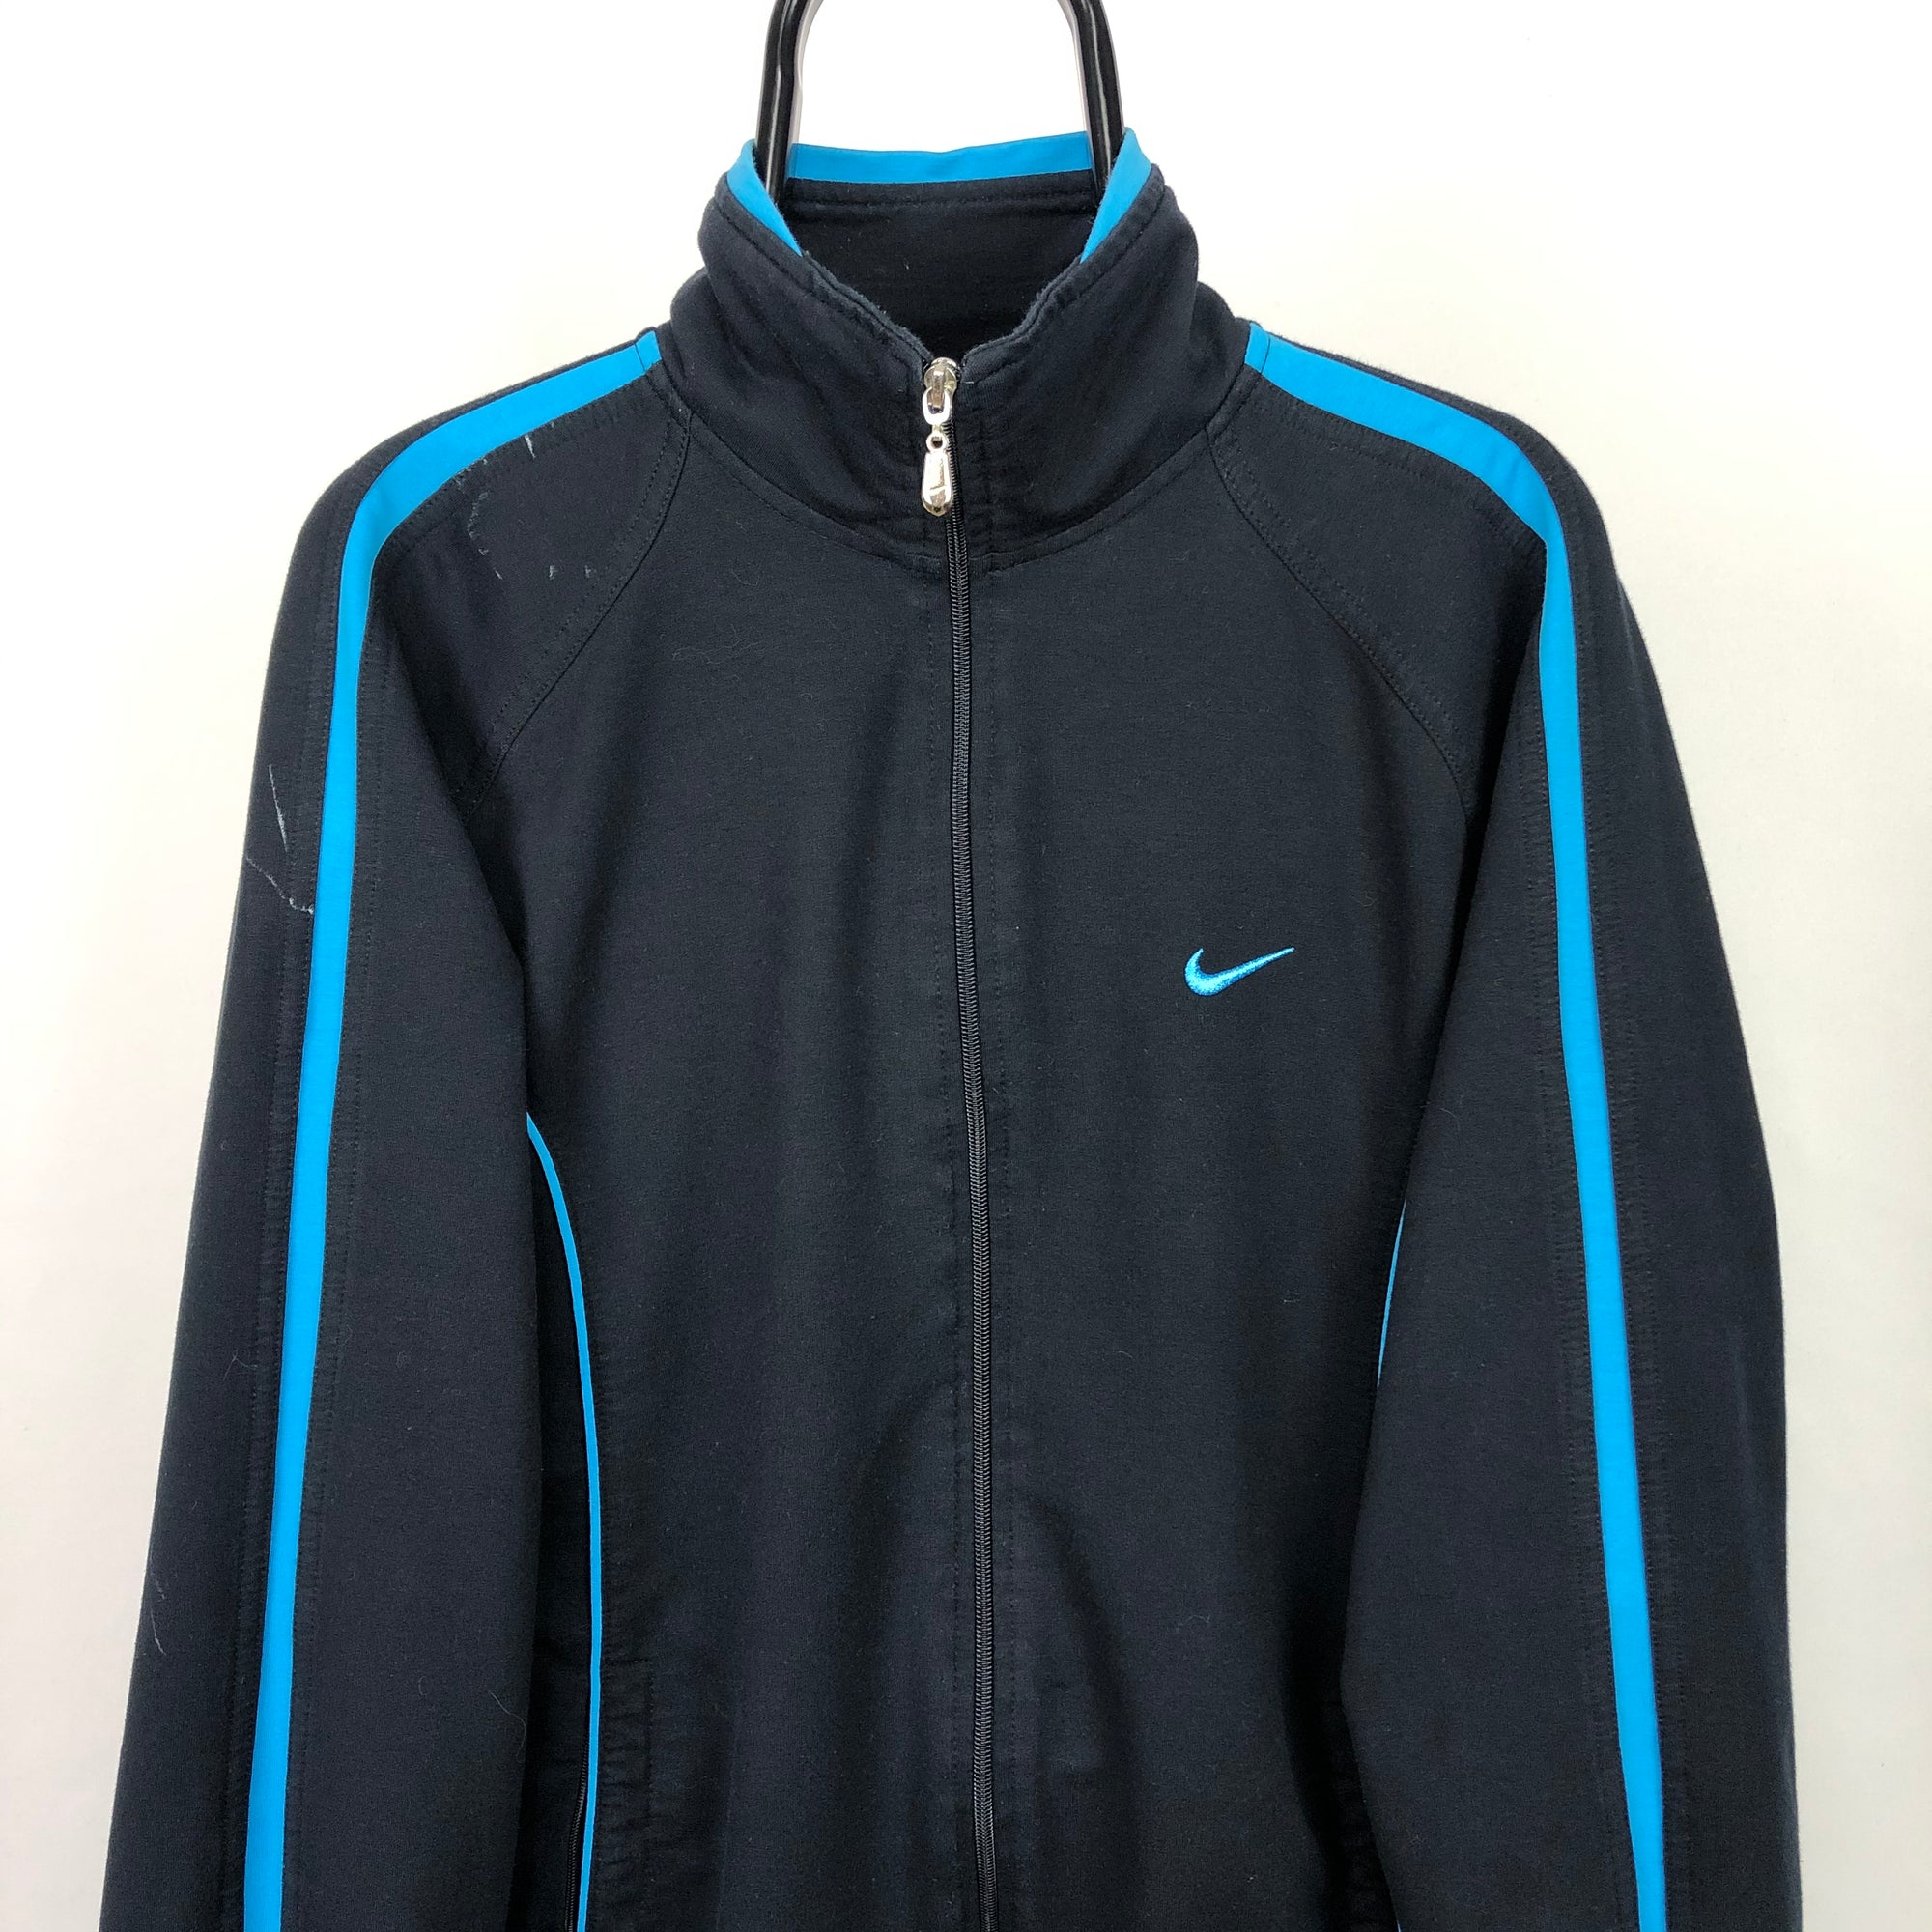 Vintage Nike Track Jacket in Black/Blue - Men's Medium/Women's Large